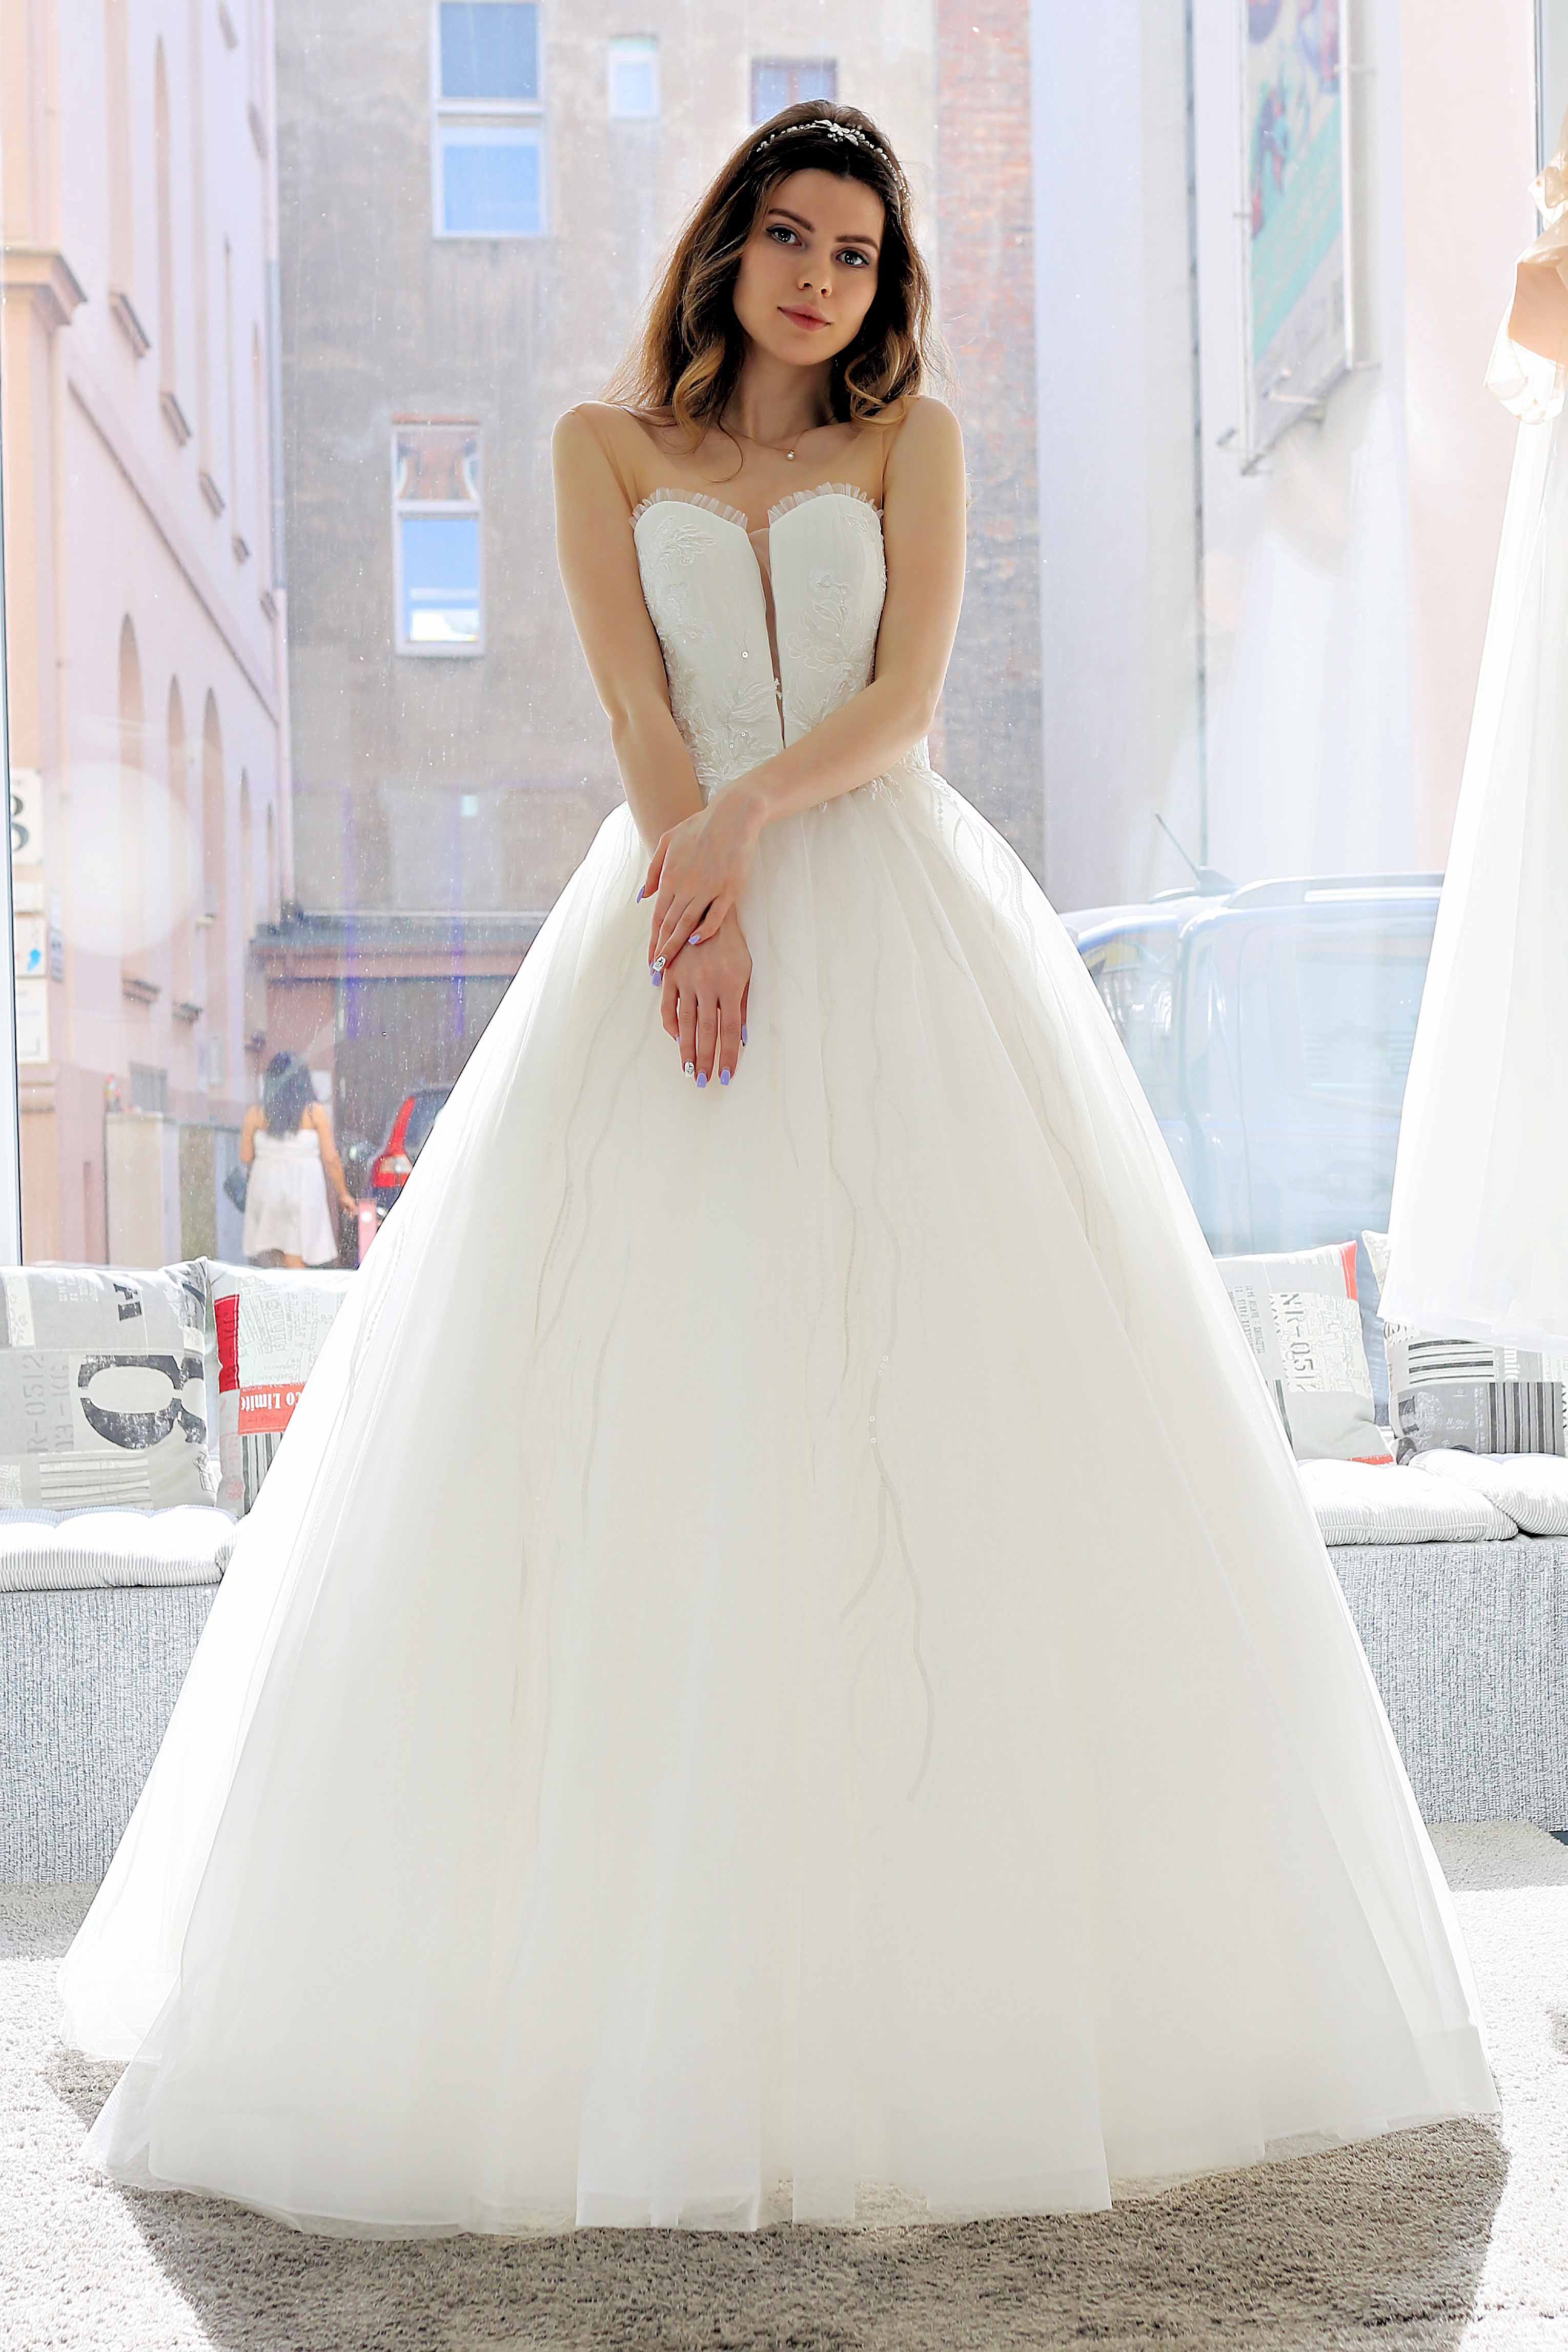 Schantal Brautkleid aus der Kollektion „Pilar“, Modell 14022.